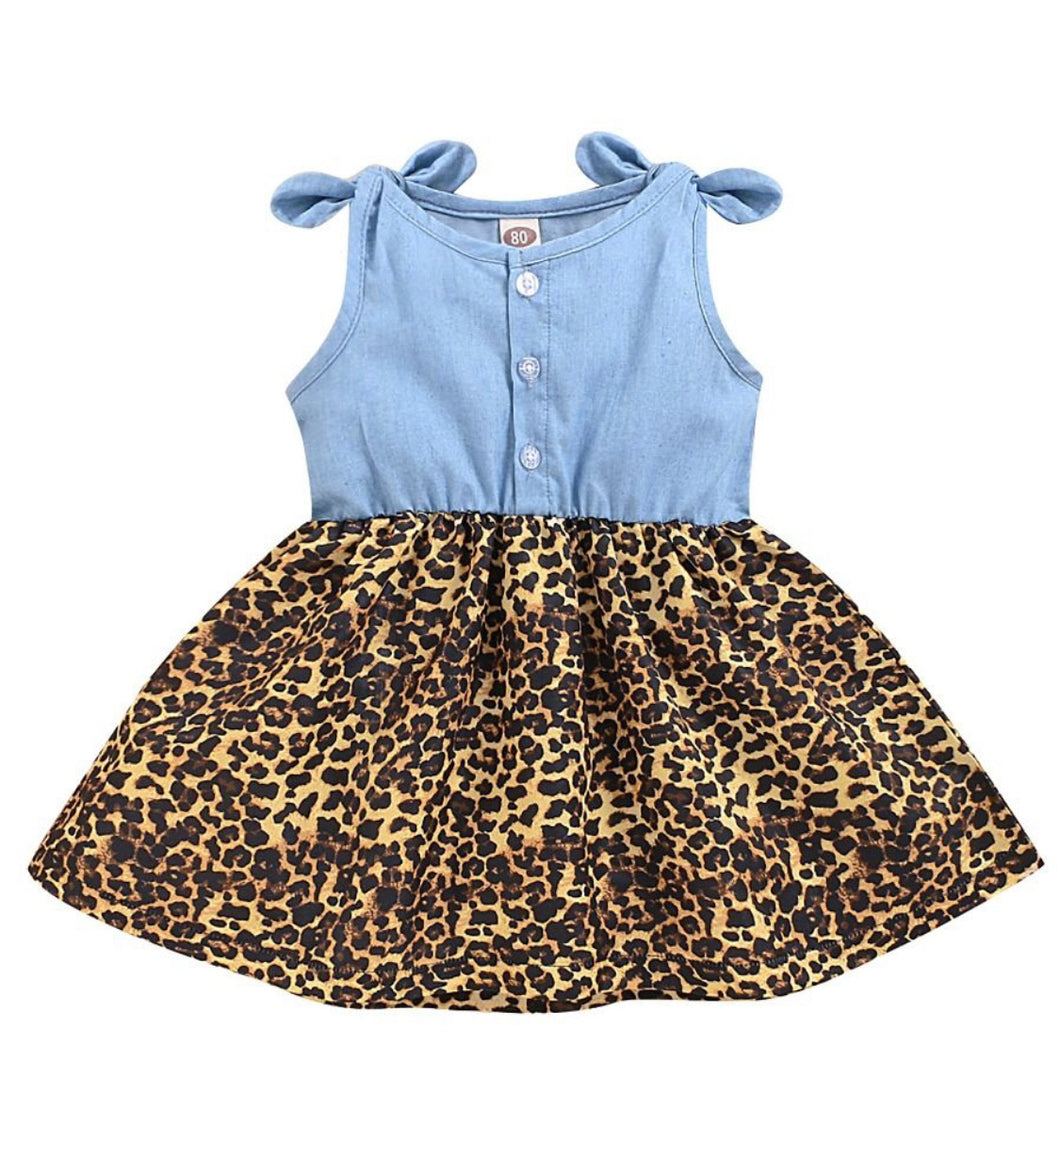 Baby girls denim and leopard dress